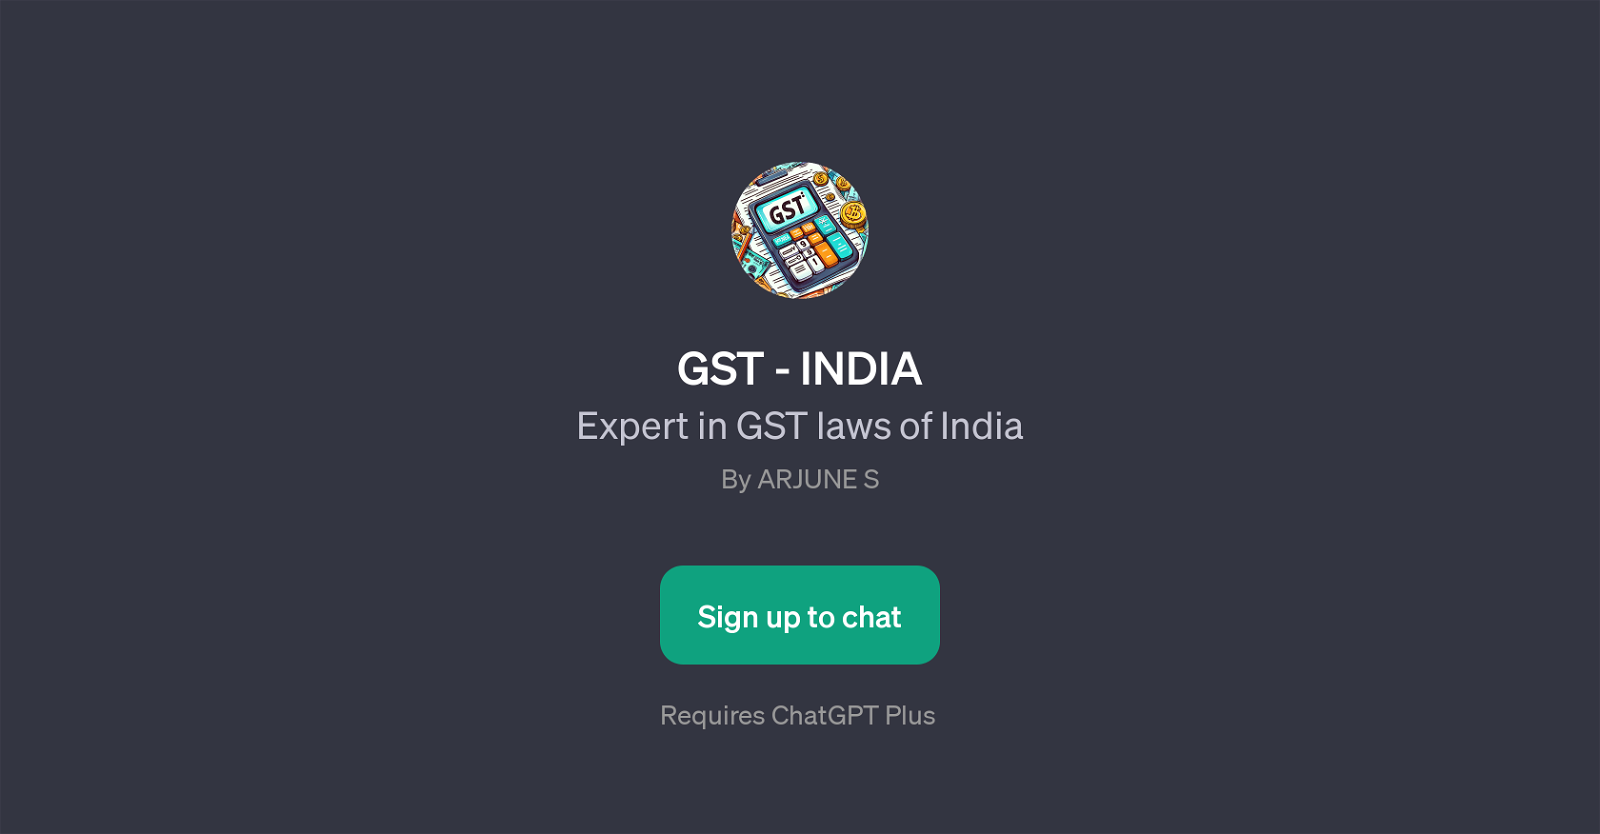 GST - INDIA website